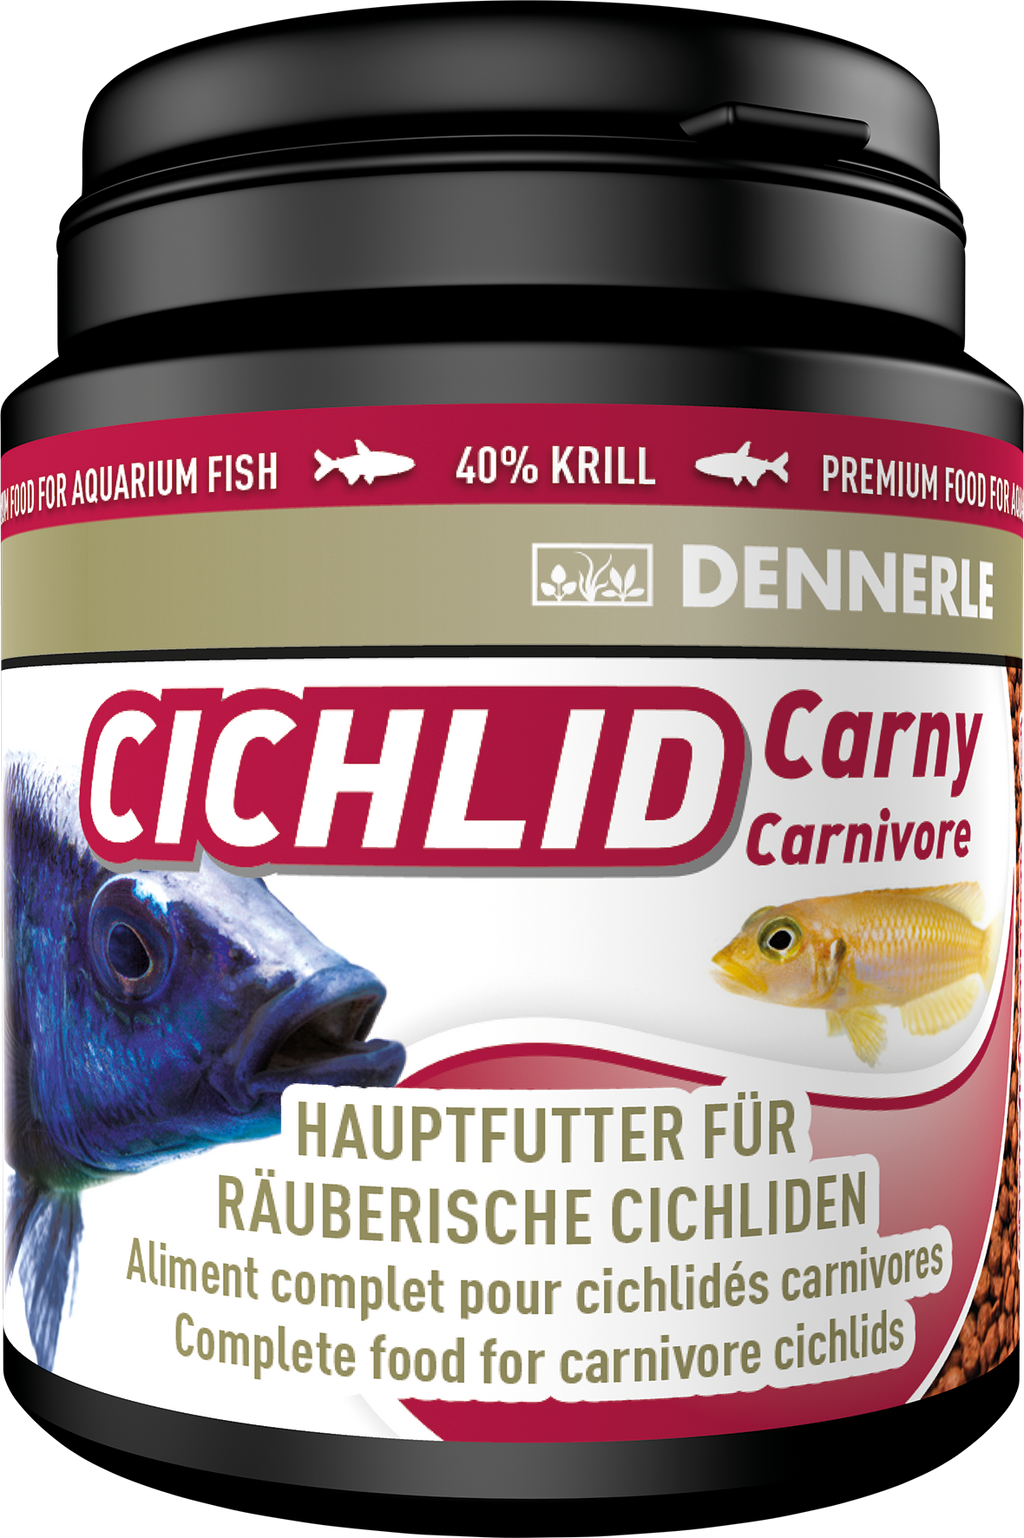 DENNERLE Cichlid Carny Carnivore (100g)